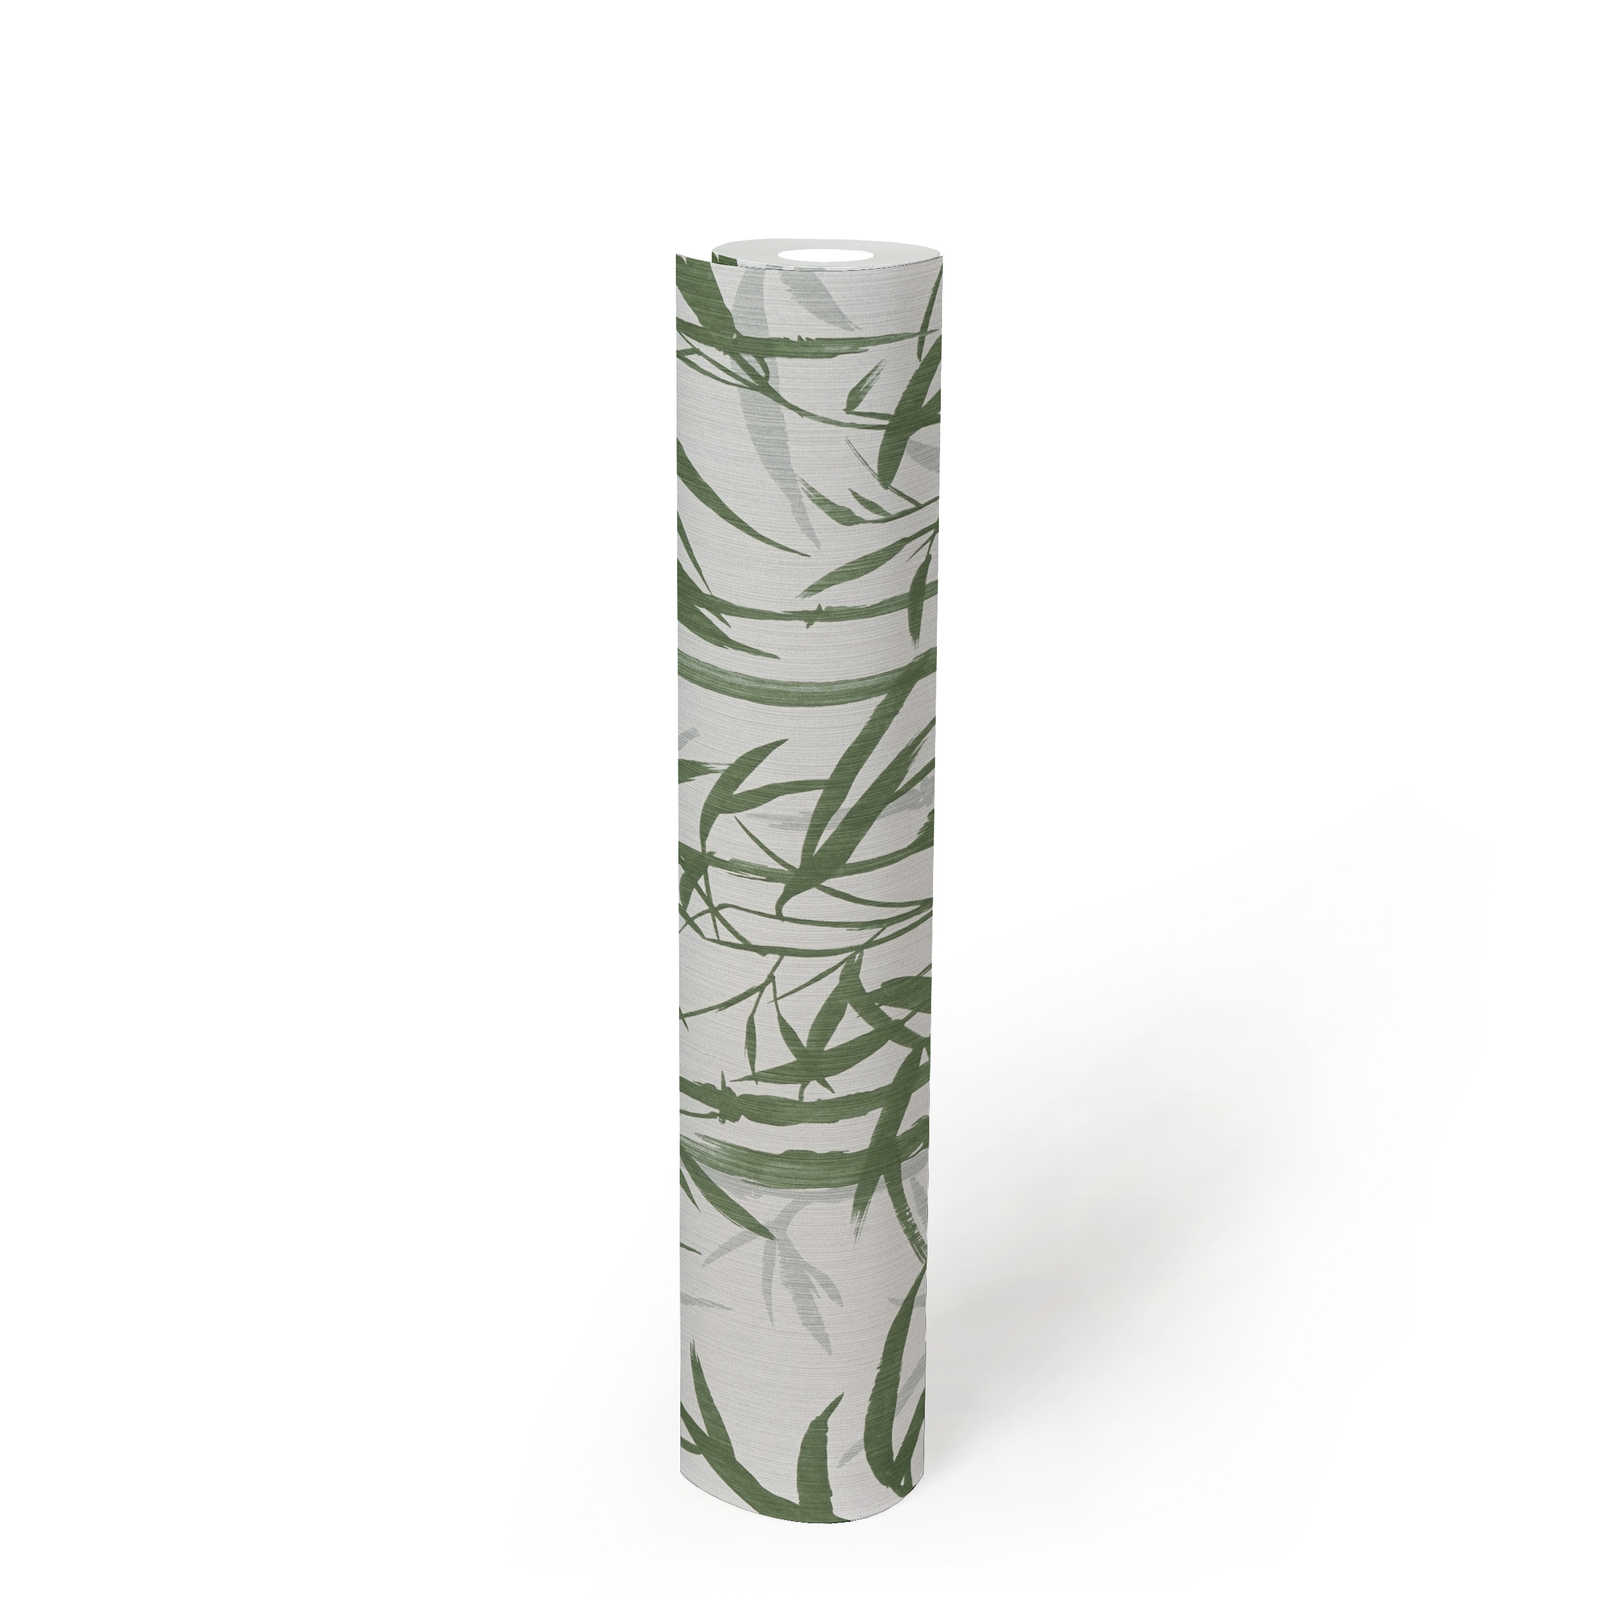             Carta da parati in tessuto non tessuto MICHALSKY motivo bambù naturale - crema, verde
        